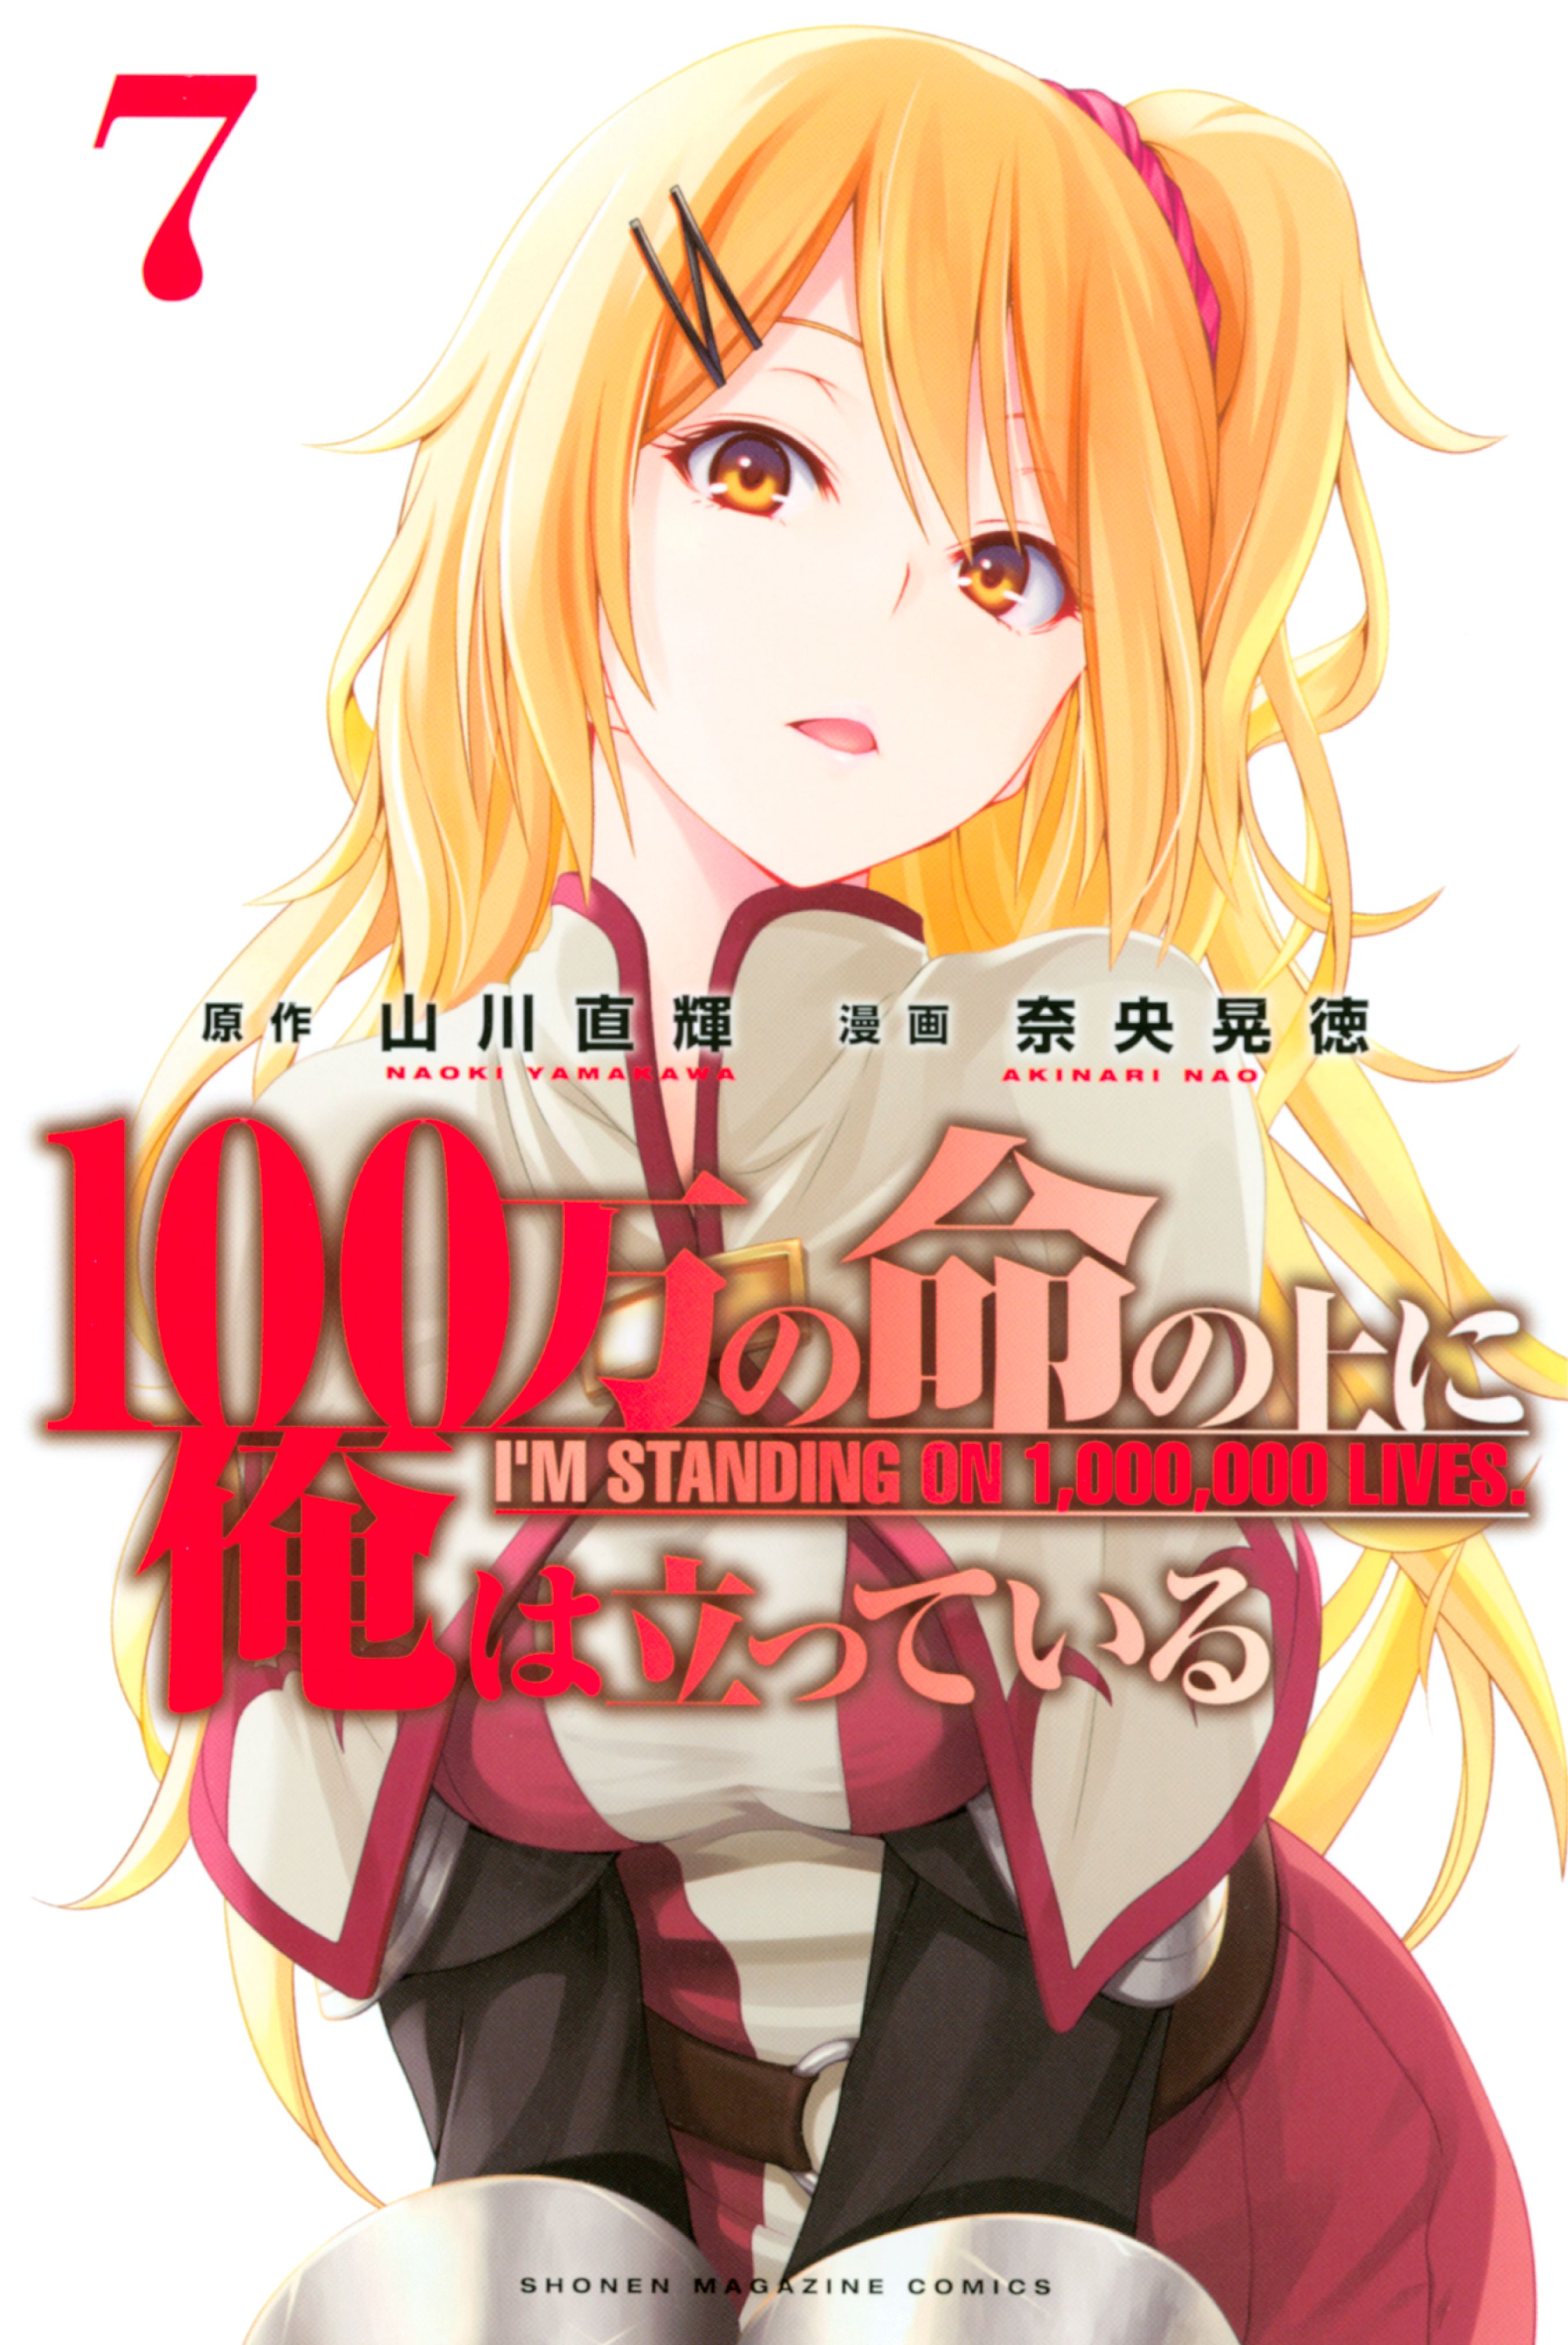 100-man no Inochi no Ue ni Ore wa Tatteiru (I'm standing on a million  lives) Studio: Maho Film. Source: Manga. Released: October 2, 2020.  Episode: 12., By Otaku Connection